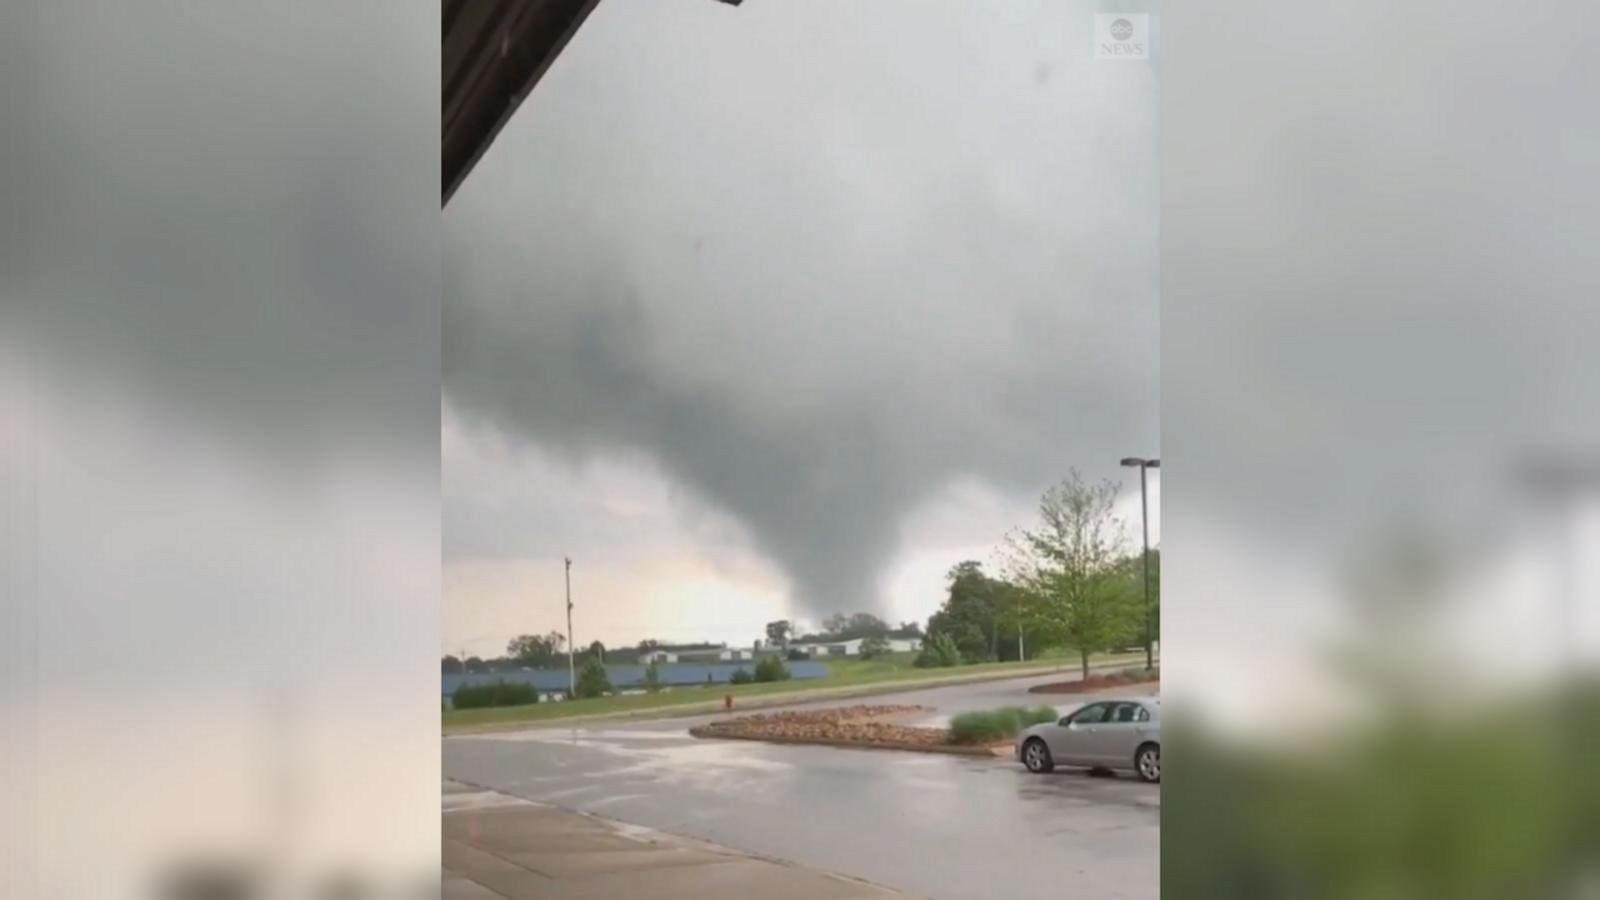 Tornado damage reported in Arkansas Good Morning America